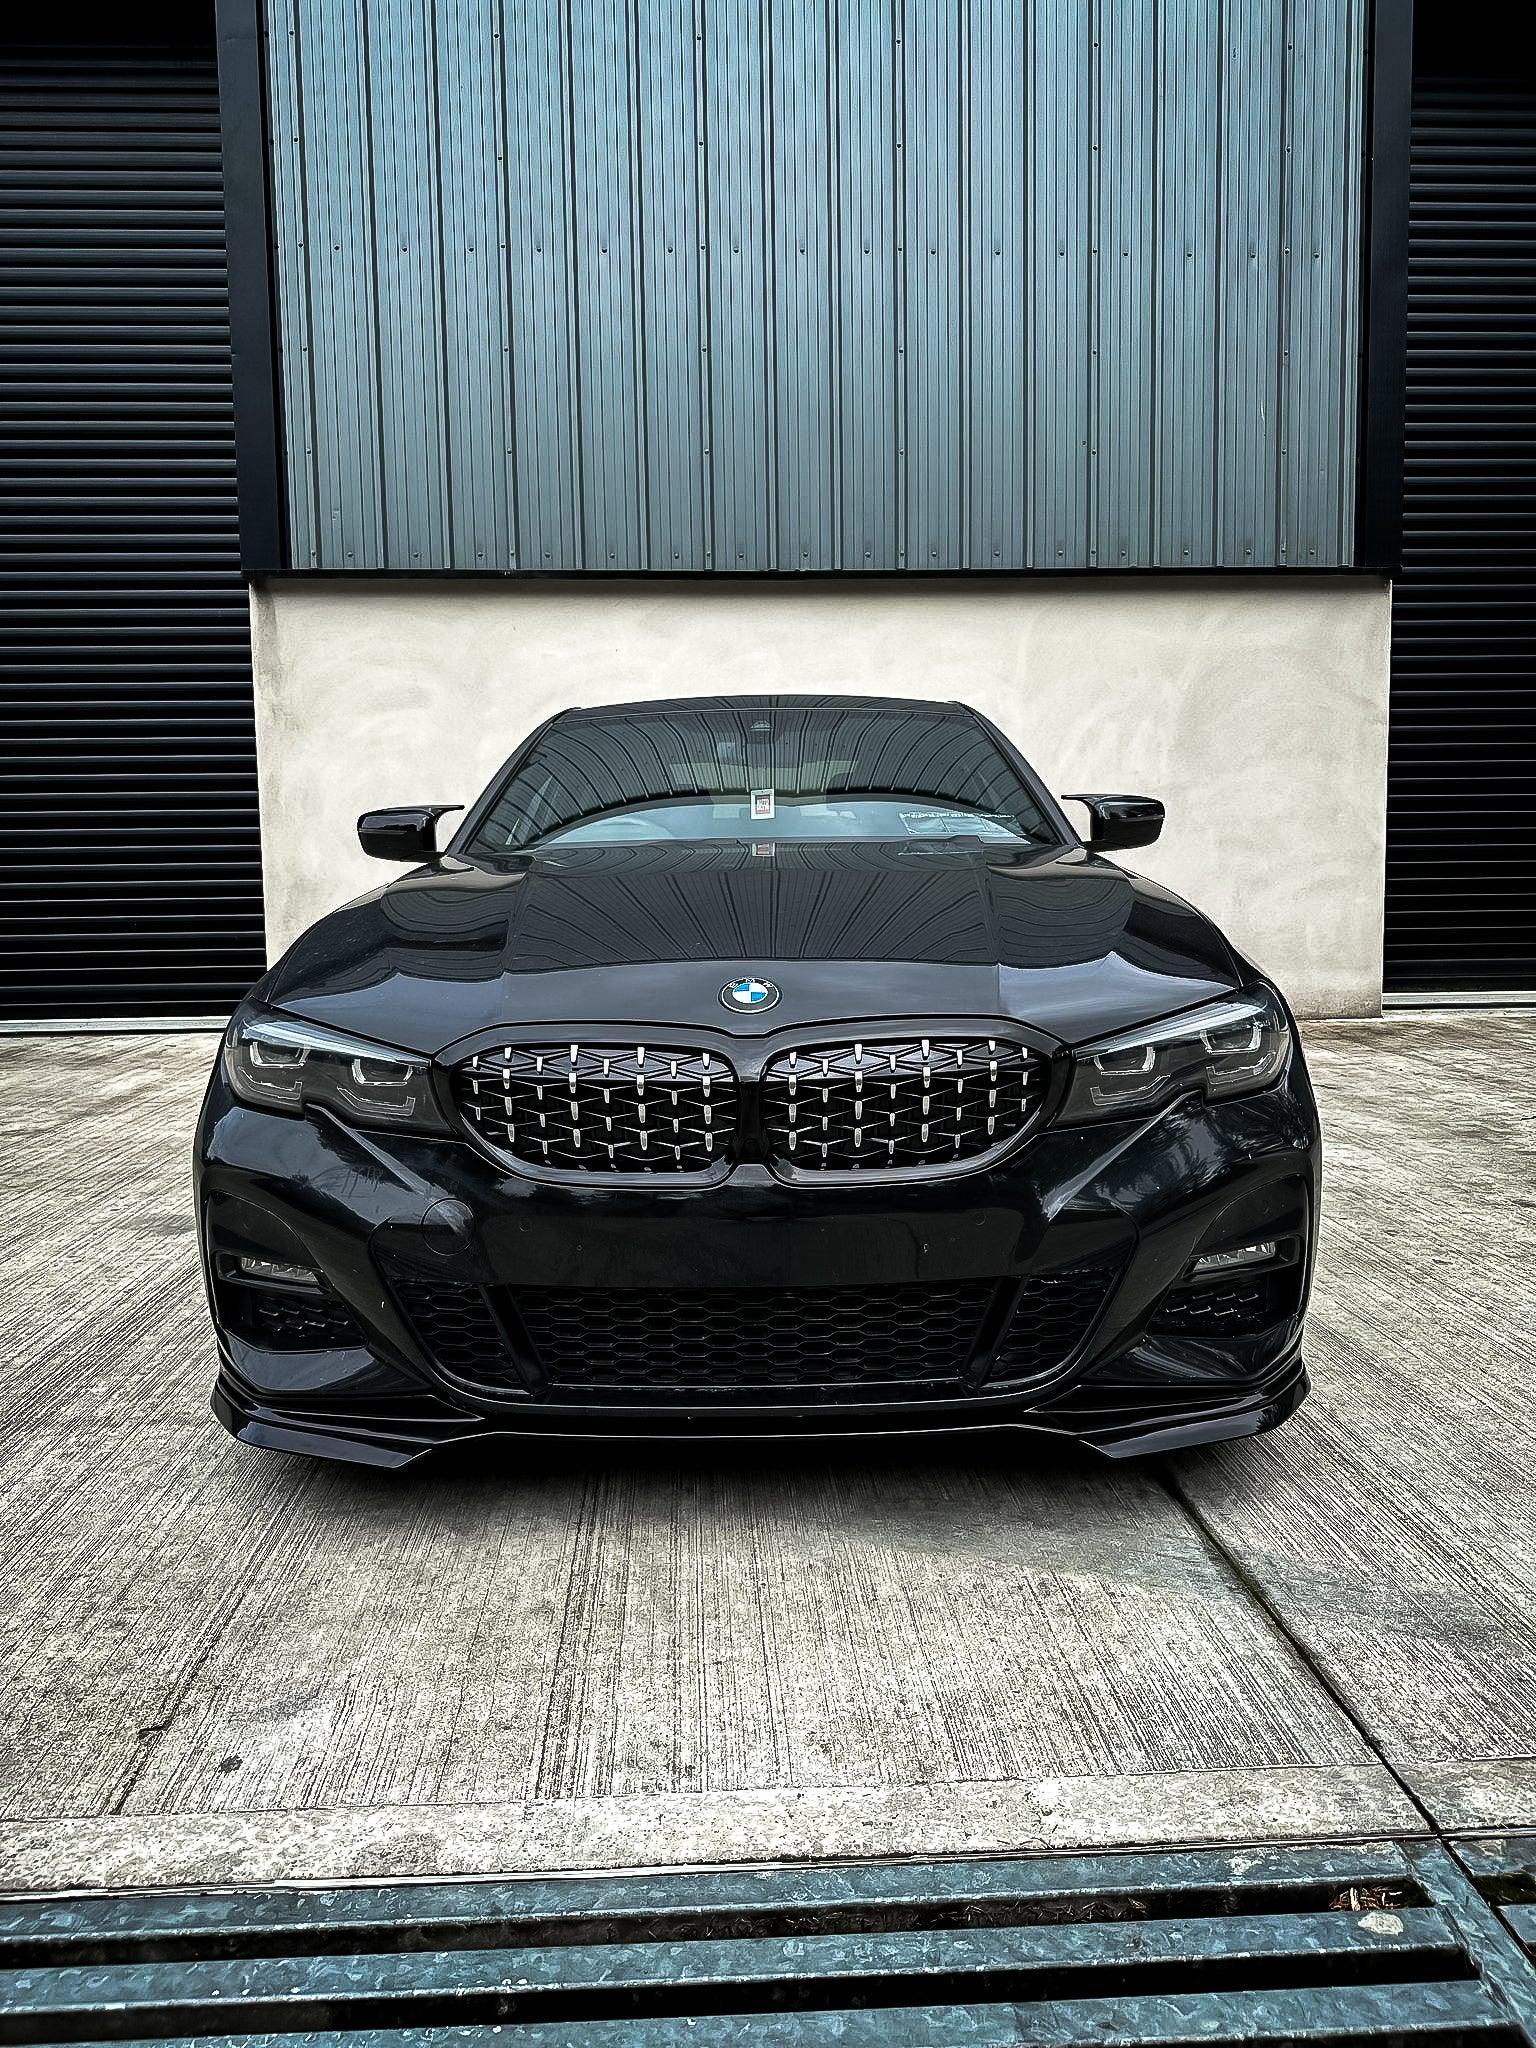 BMW 3 Series G20/G21 2018-2021 (pre-lci) Diamond Style Front Grill Gloss Black & Silver - RisperStyling